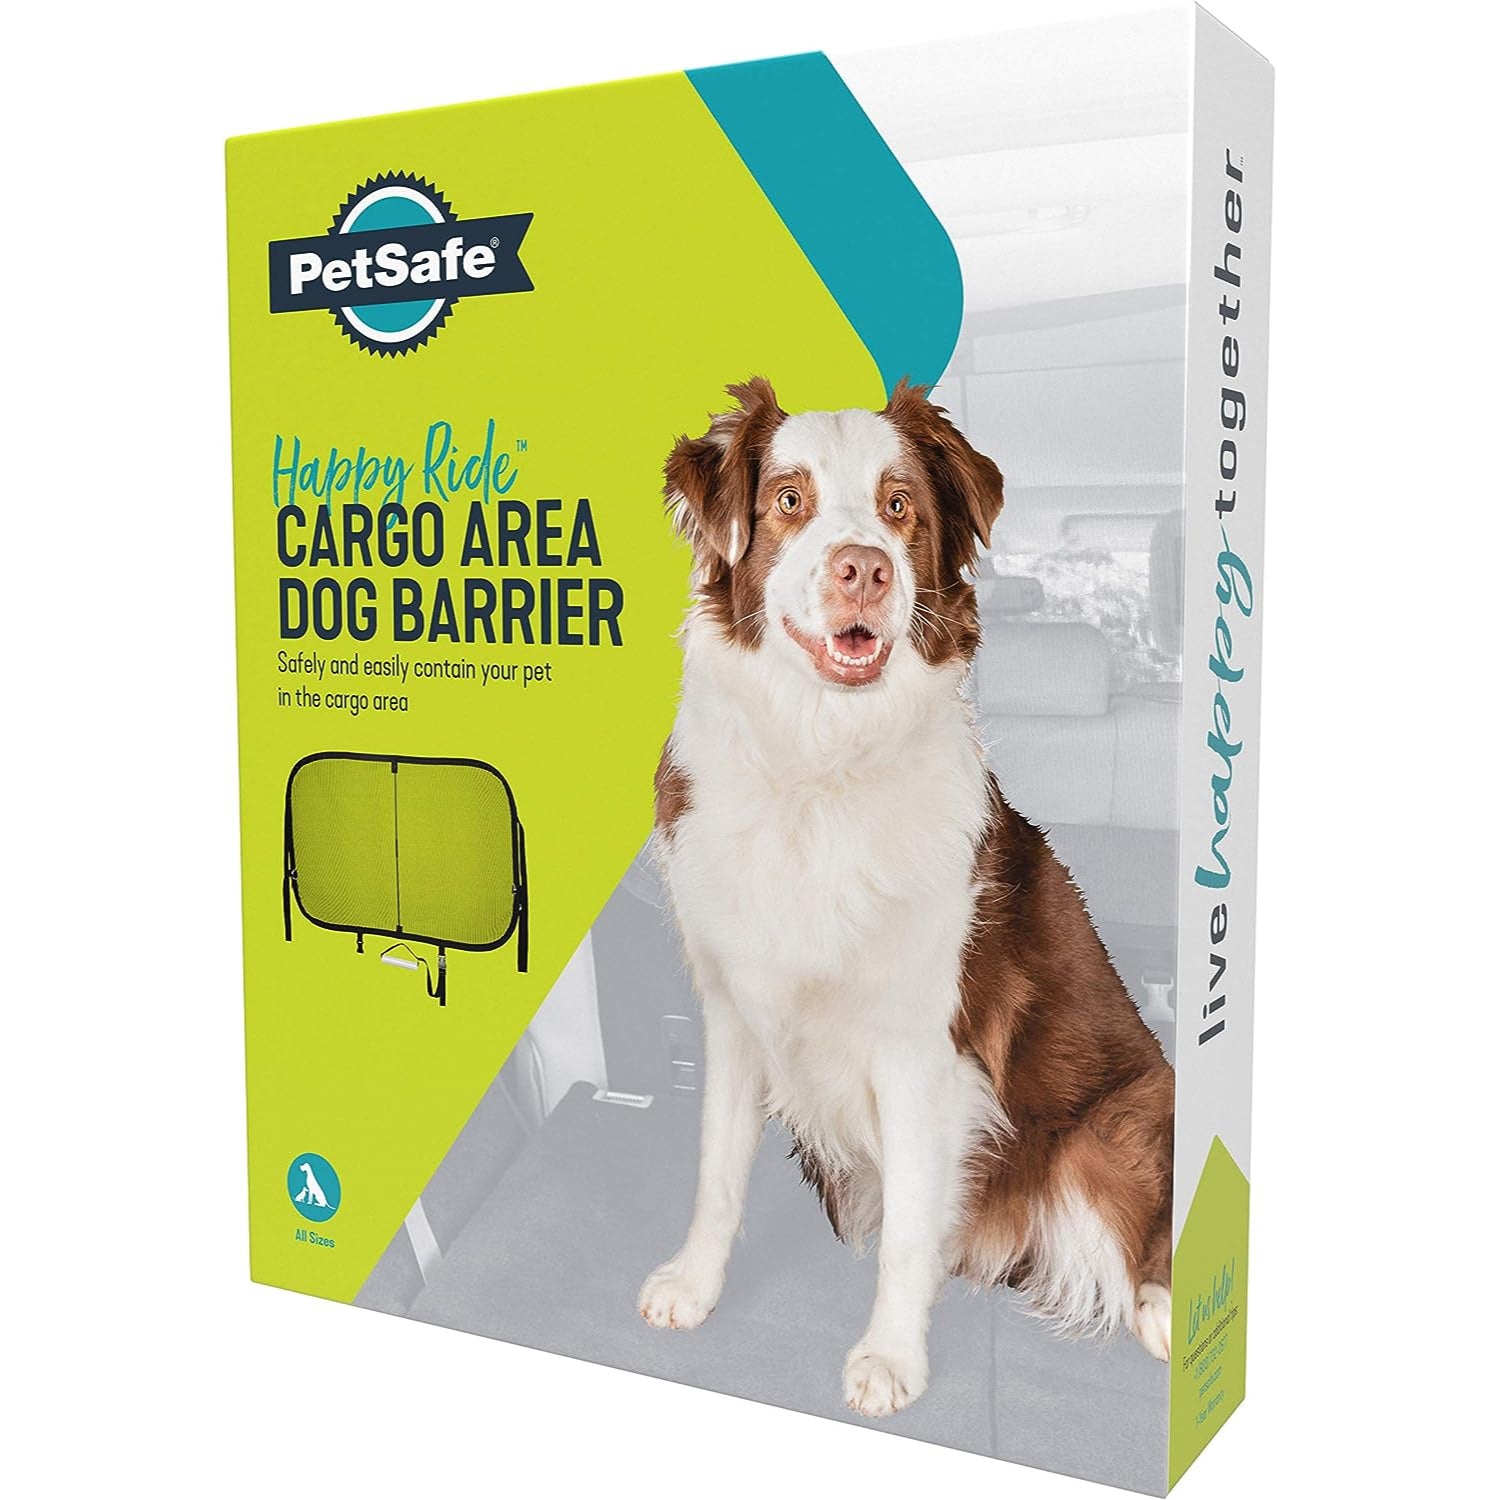 PetSafe Happy Ride Cargo Area Dog Barrier